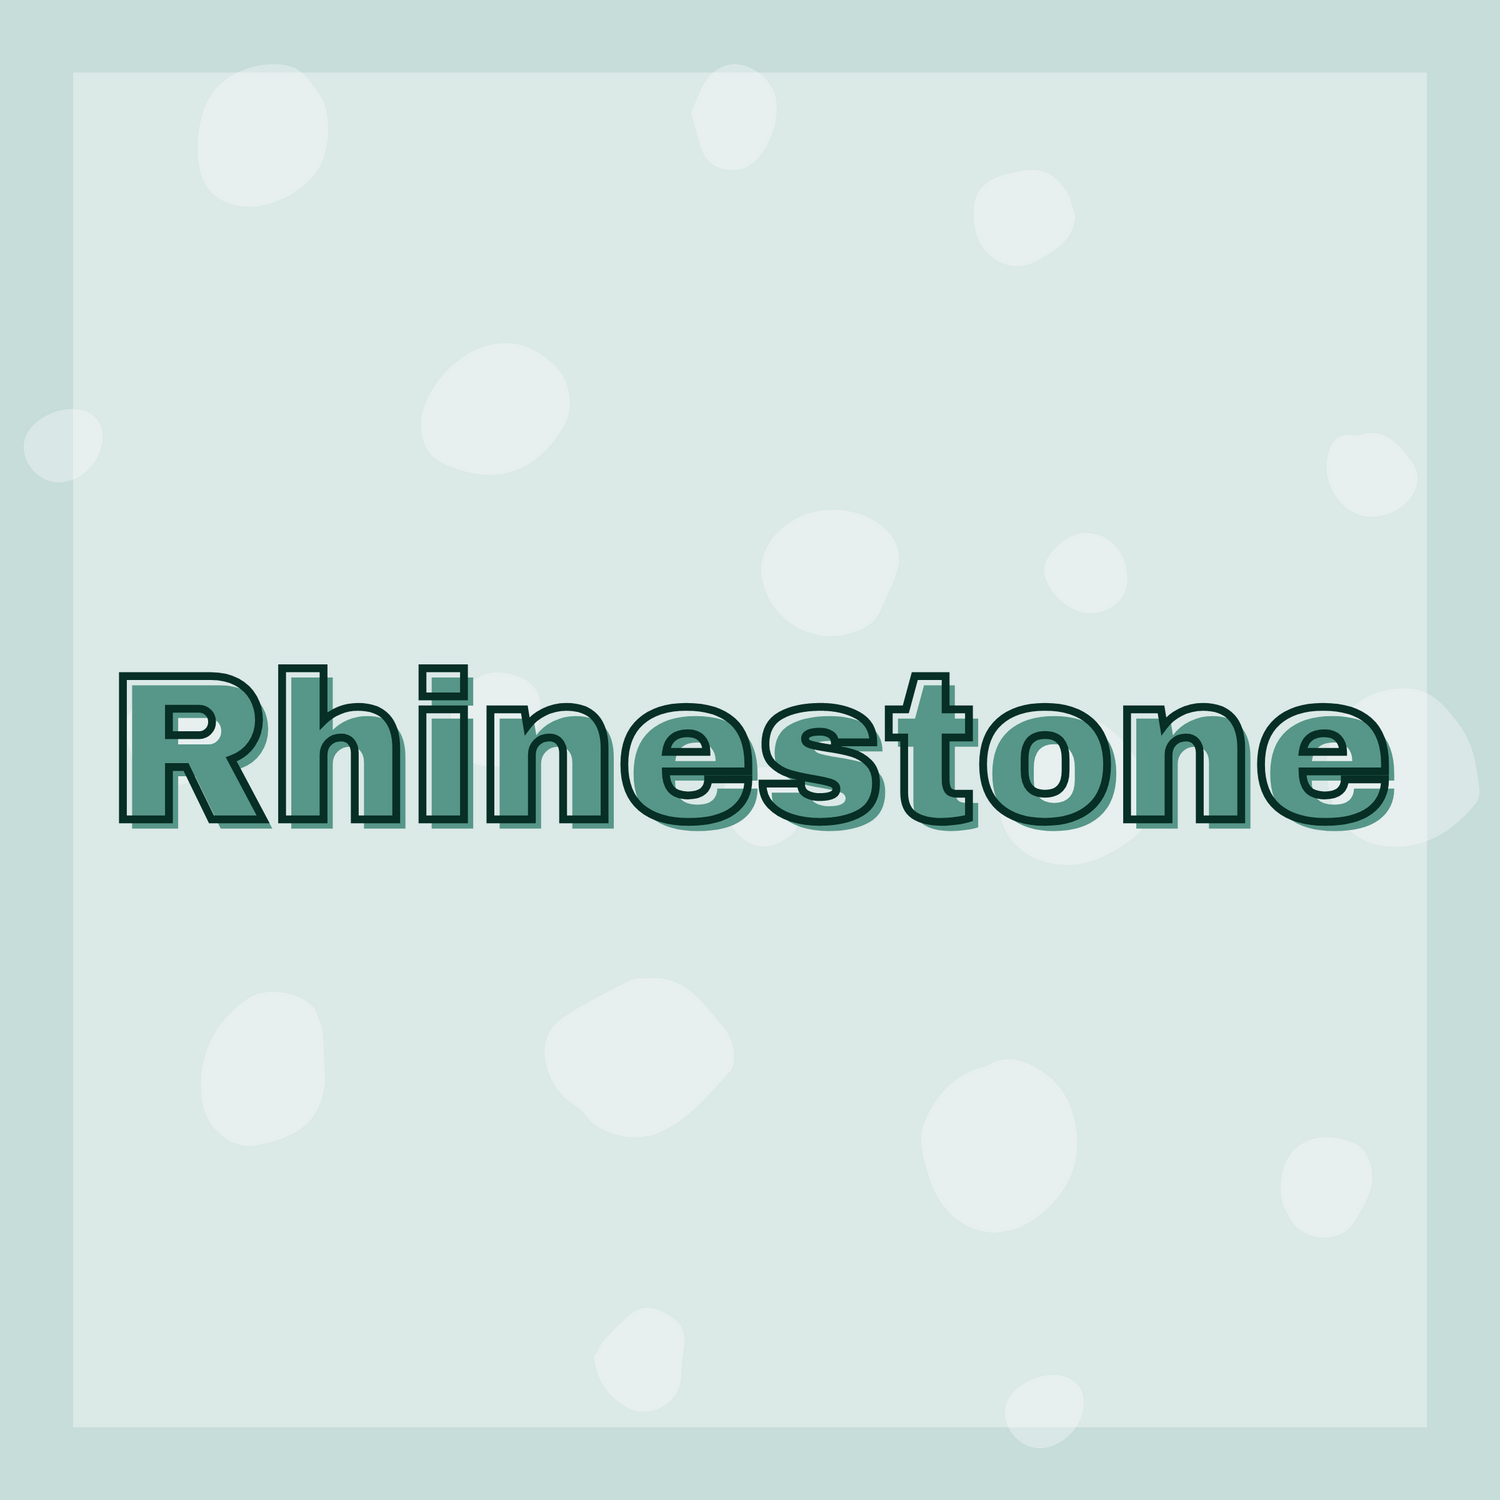 Rhinestoned Products